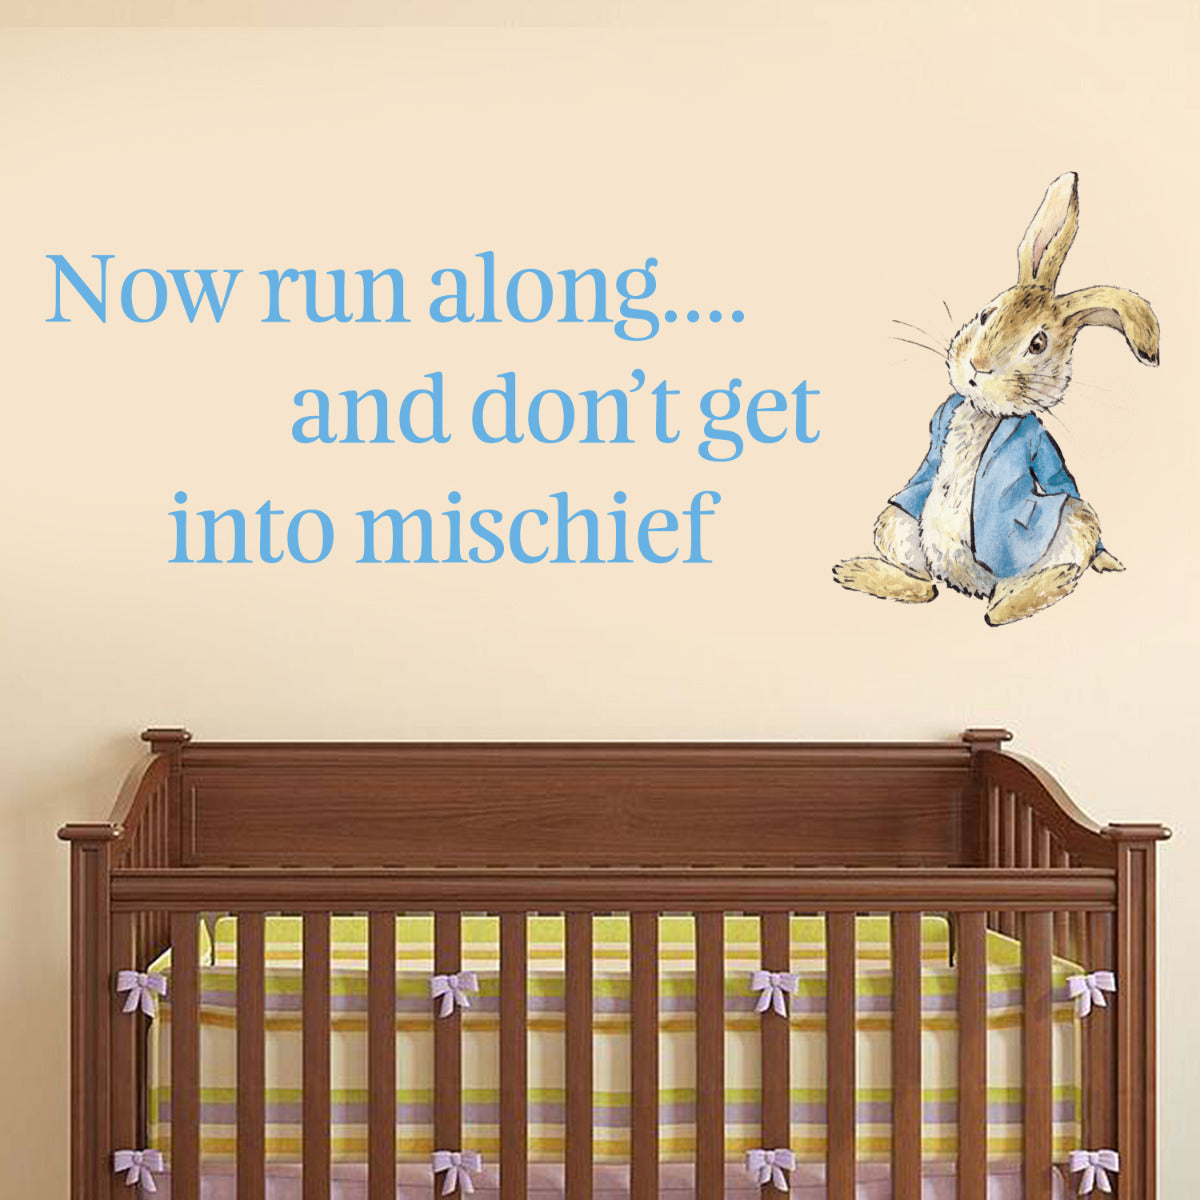 Peter Rabbit "Don't Get Into Mischief" Wall Sticker